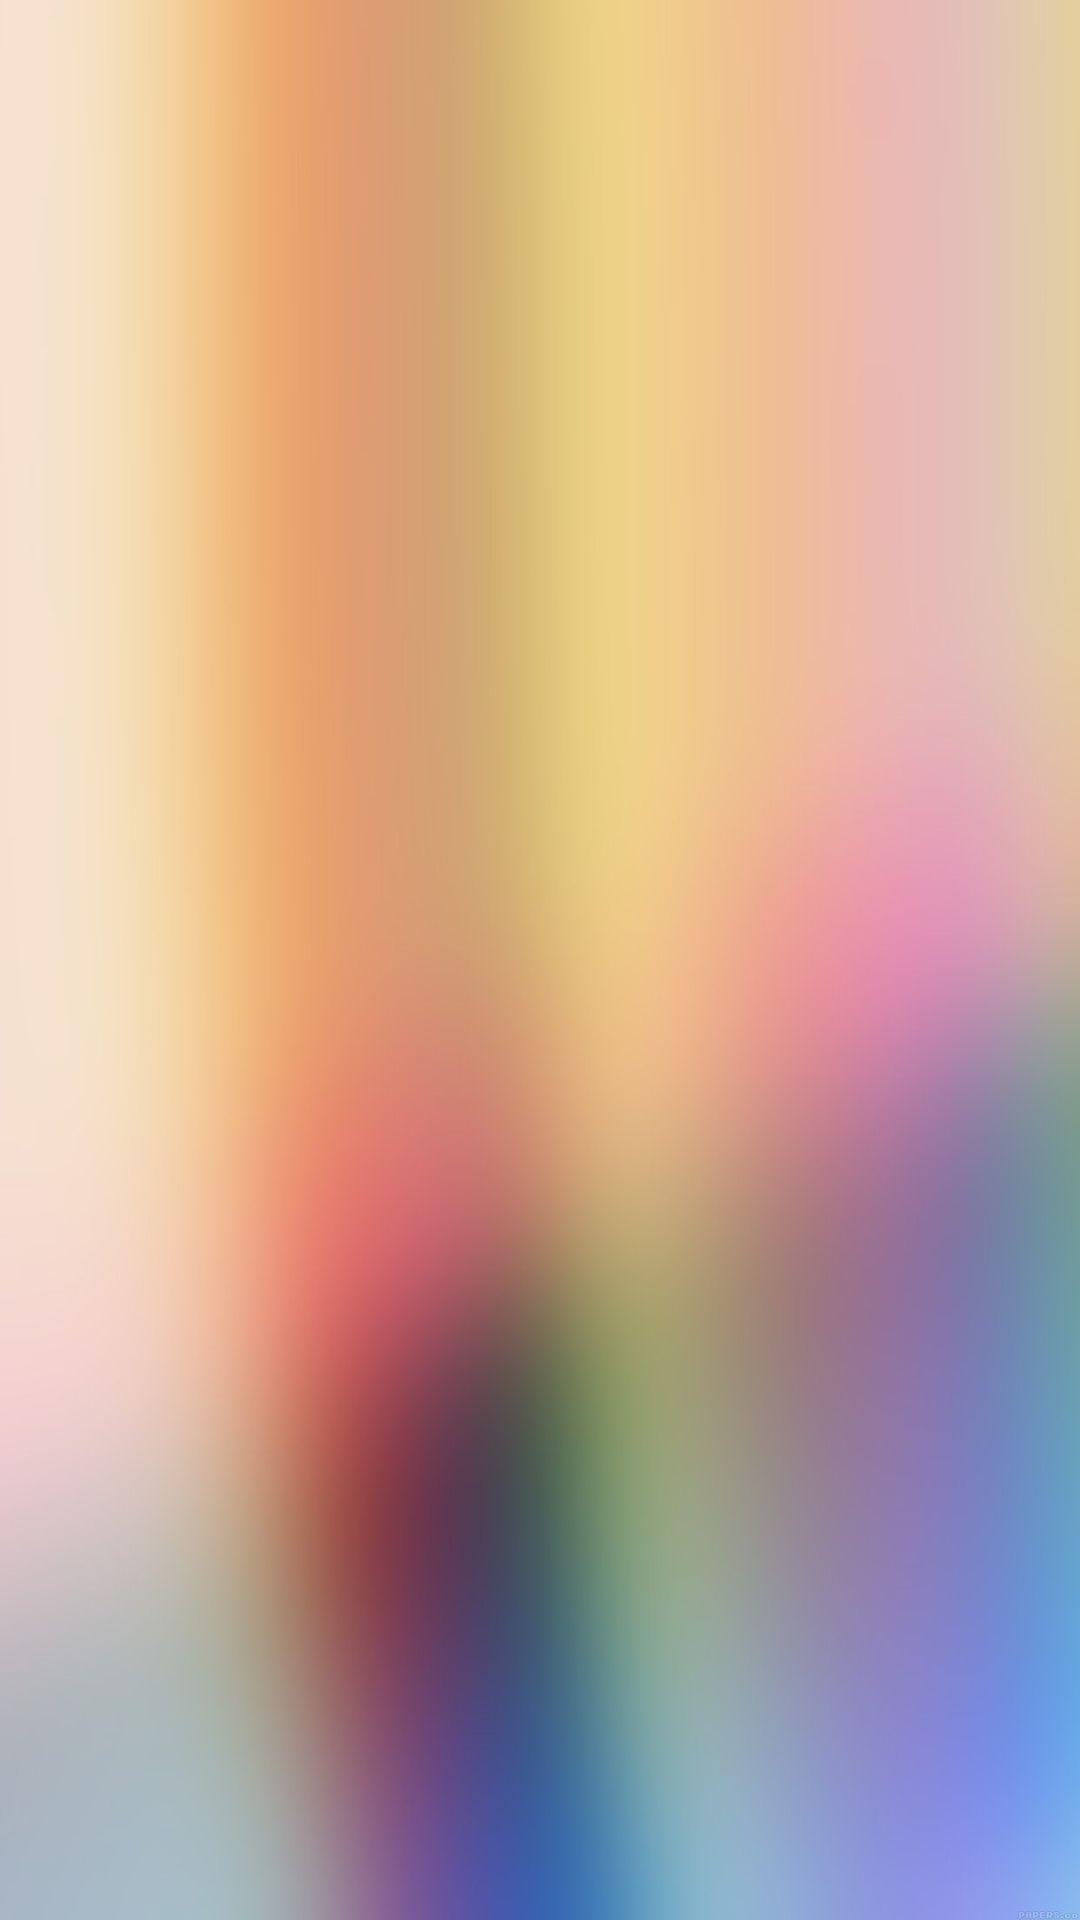 Television White Art Gradation Blur iPhone 6 Wallpaper Download